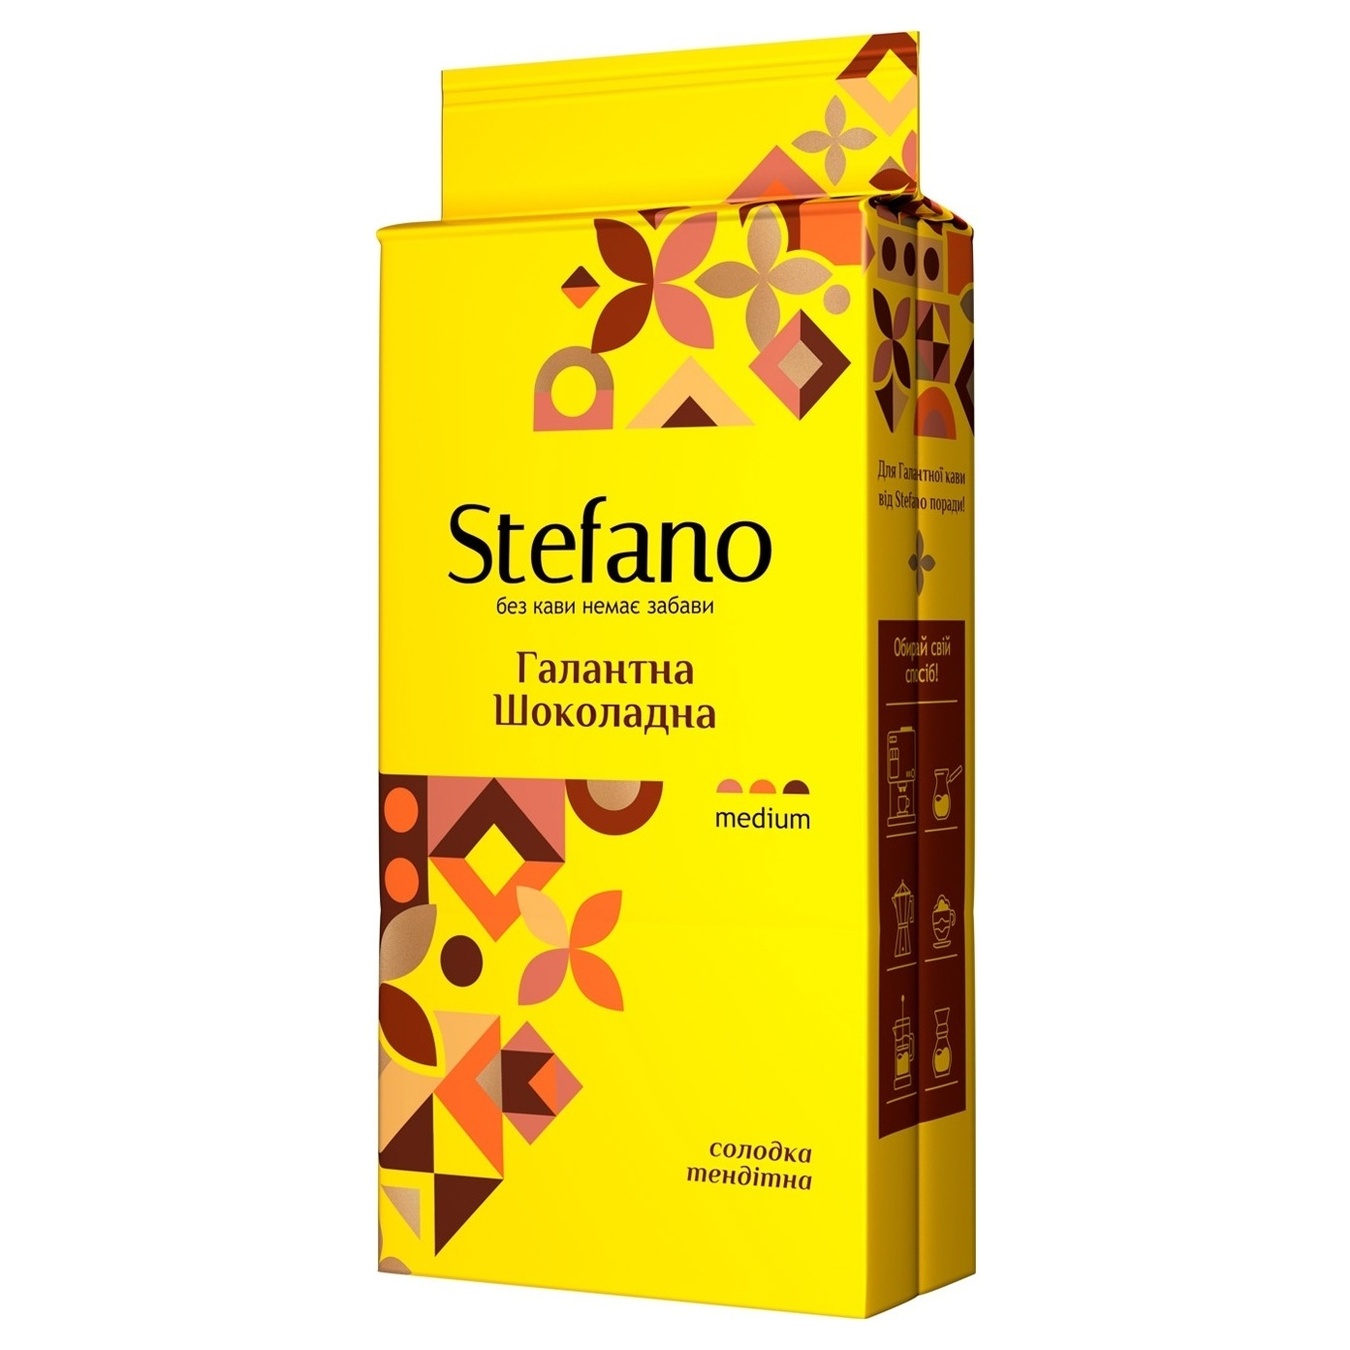 Кава Stefano натуральна смажена мелена з ароматом шоколадний трюфель Галантна шоколадна 230г